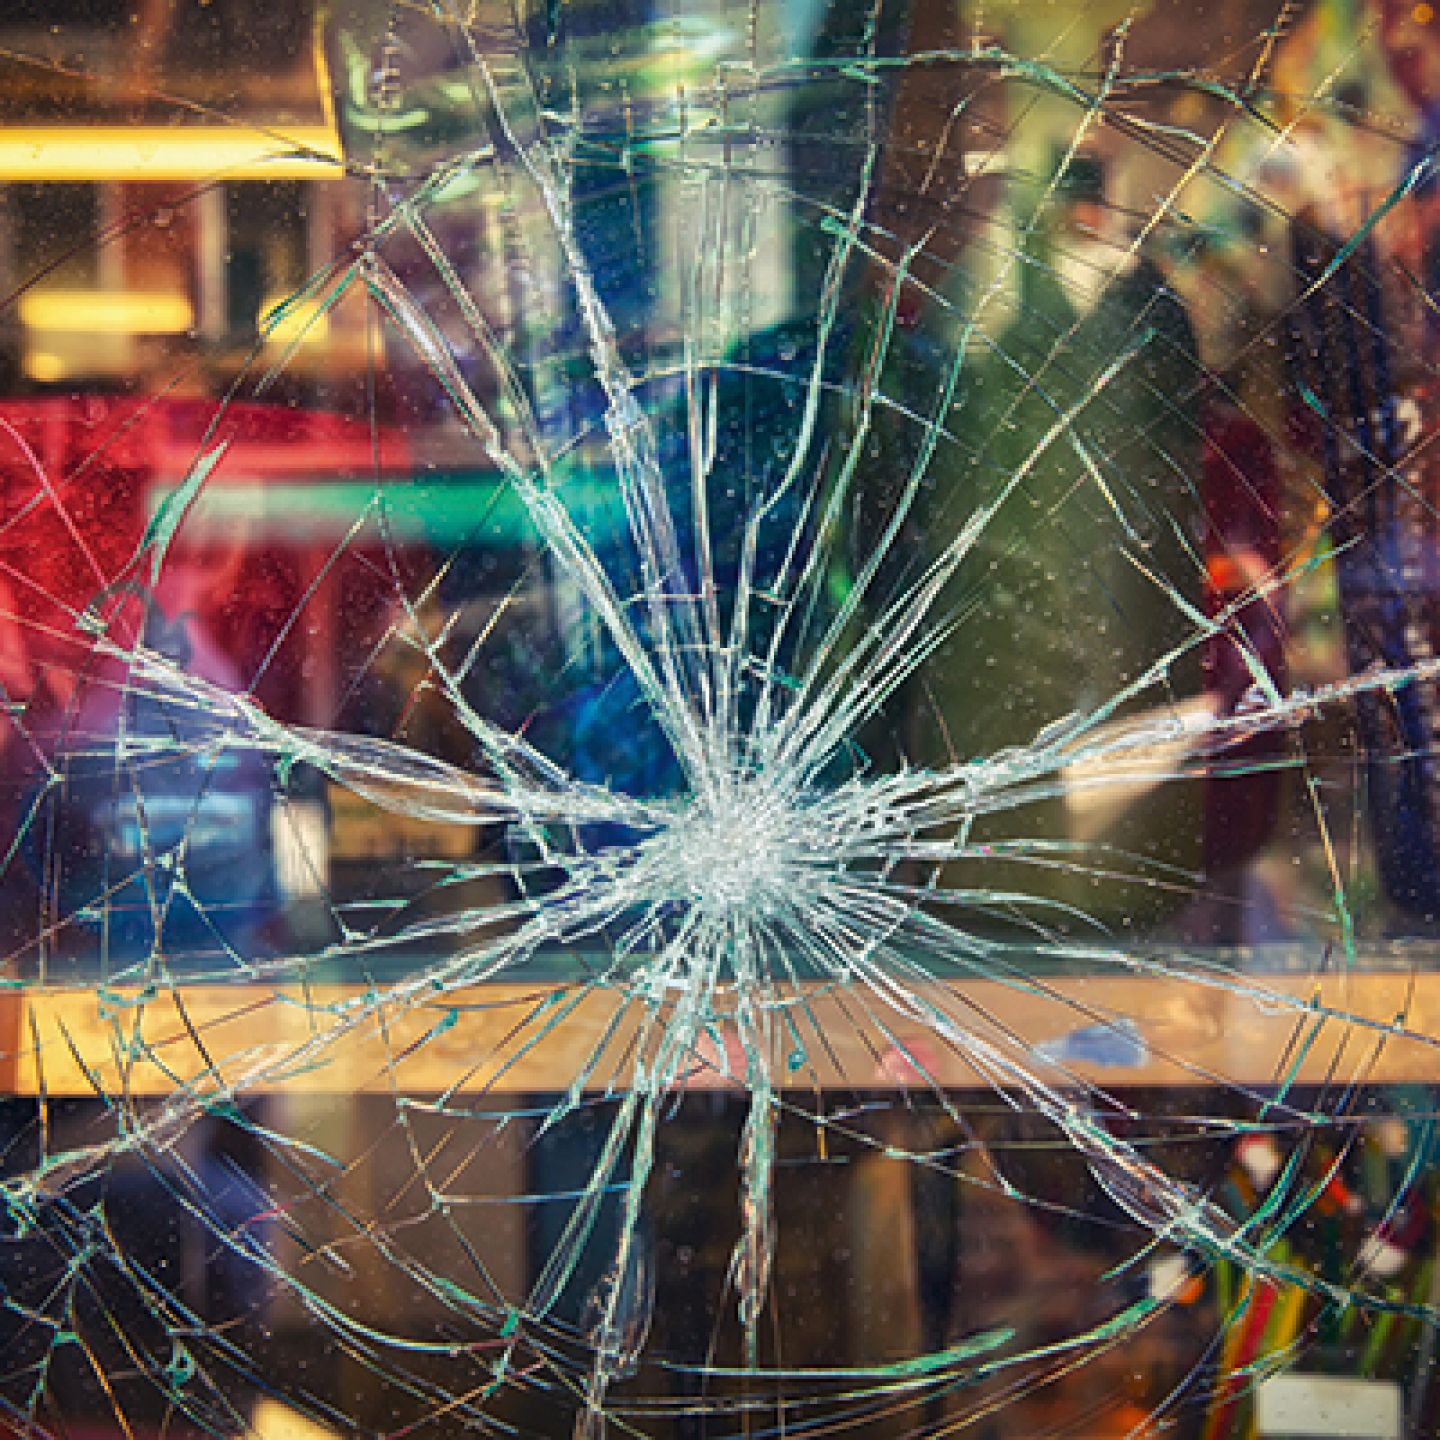 Shattered glass shop window